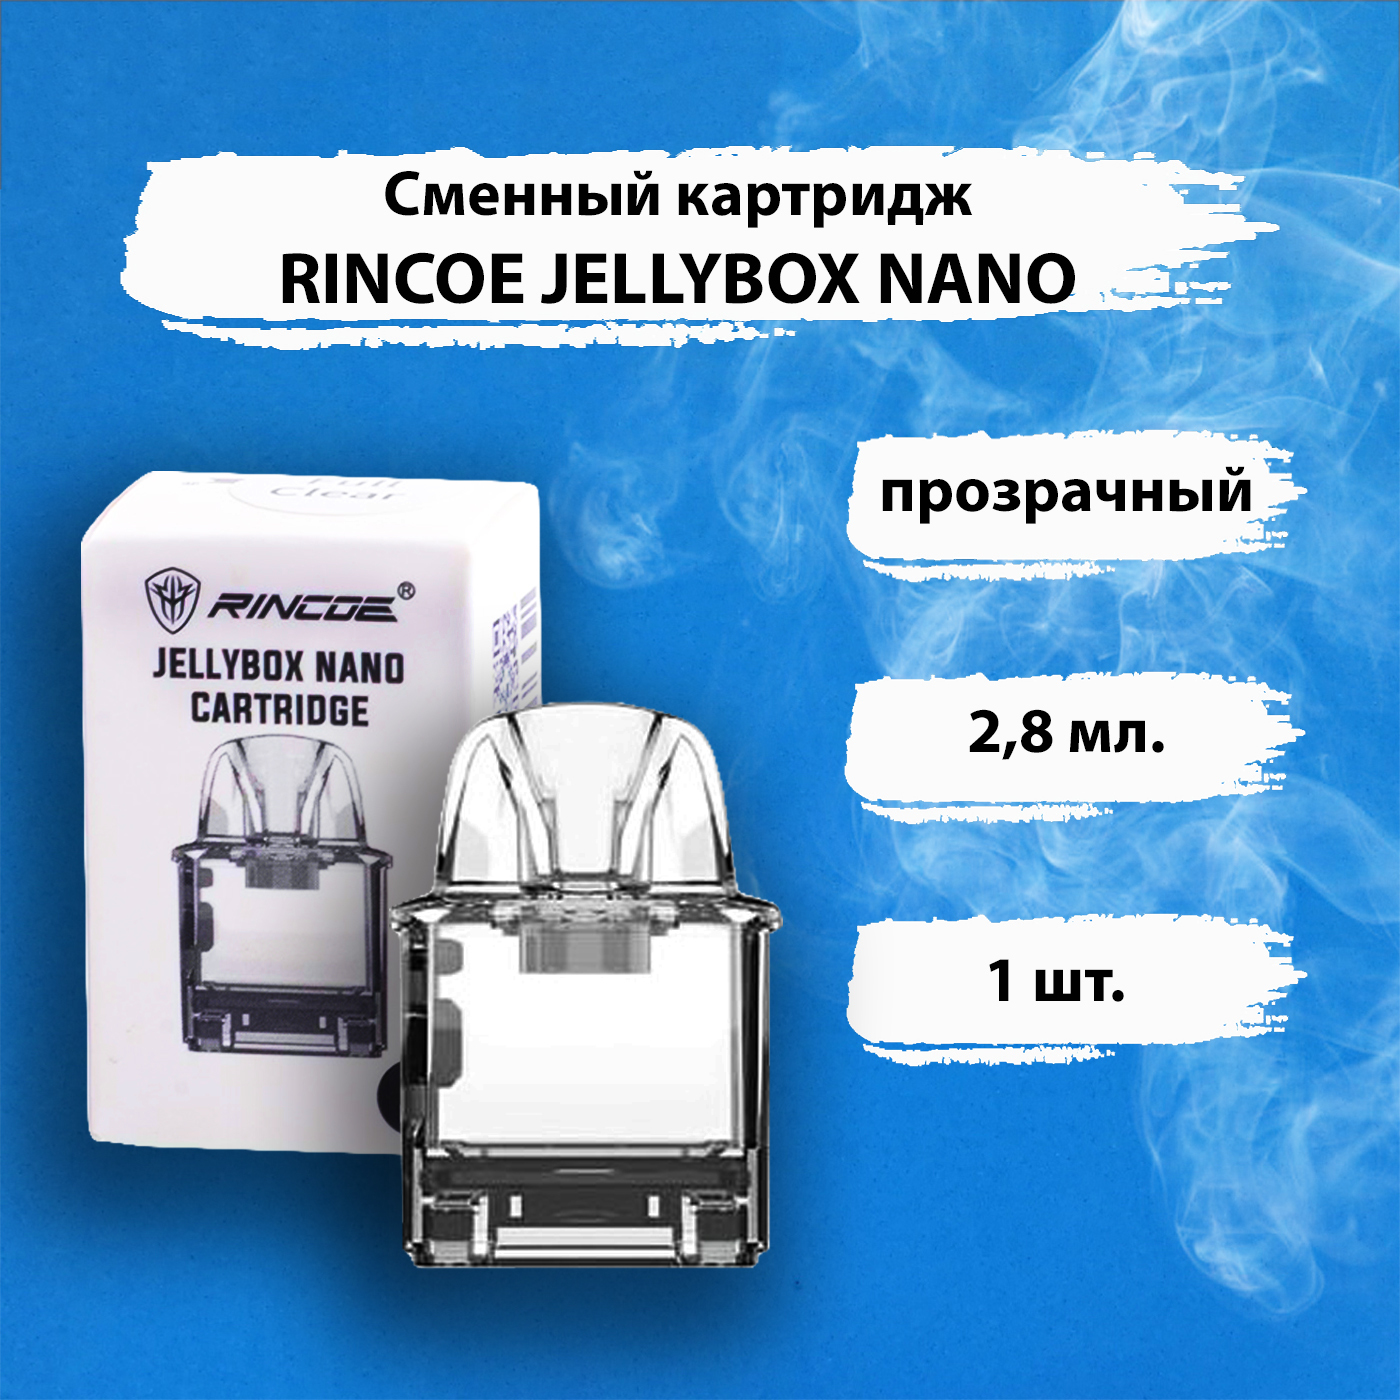 Картридж jelly box. Картридж Rincoe JELLYBOX Nano. Джелли бокс нано 2 испаритель. JELLYBOX Nano 2 картридж. Картридж на Джили бокс нано 2.